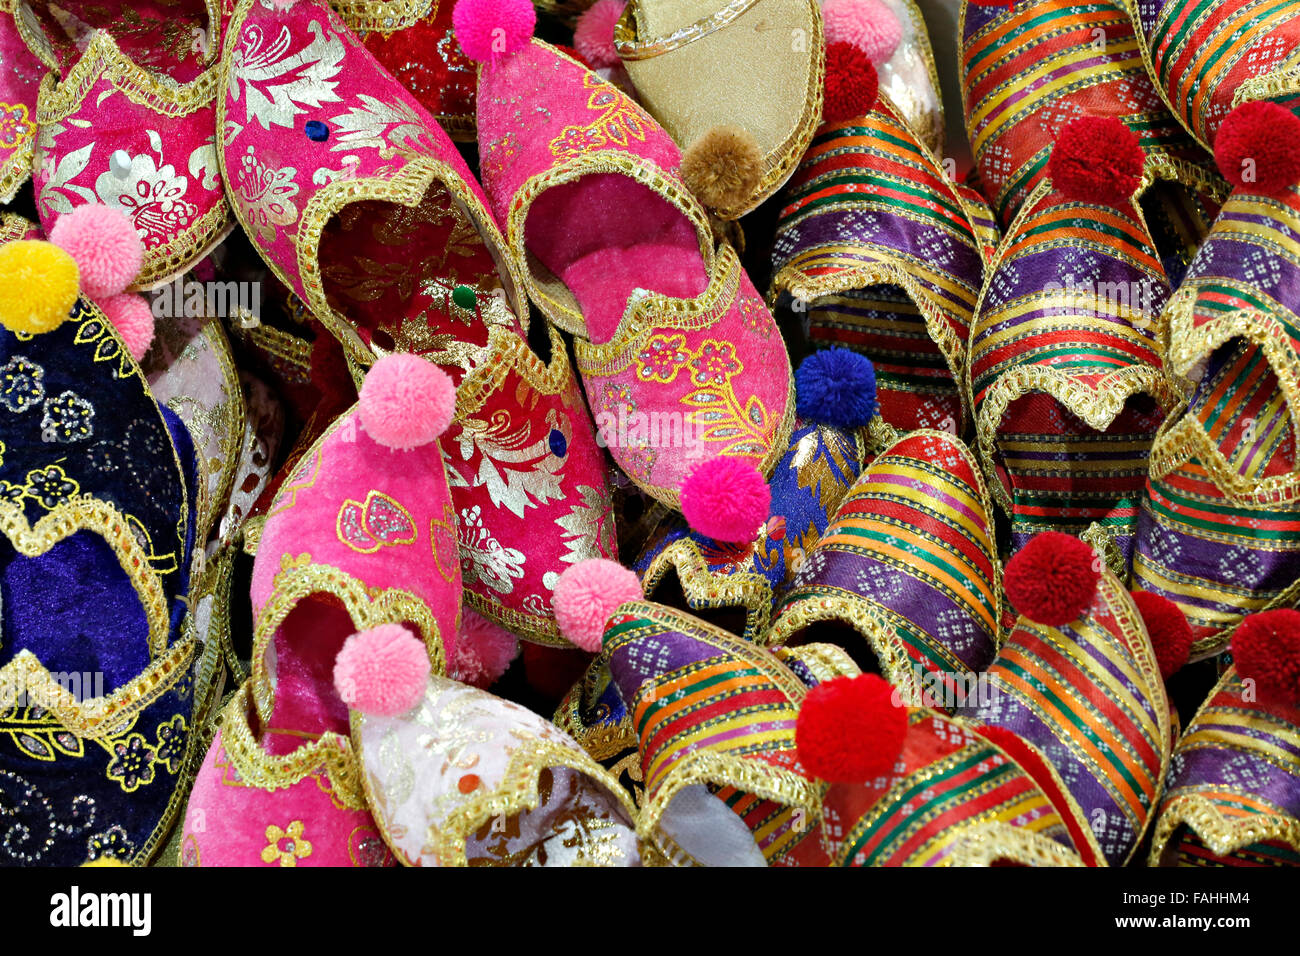 Folkloric slippers in Spice Bazaar, Istanbul, Turkey Stock Photo